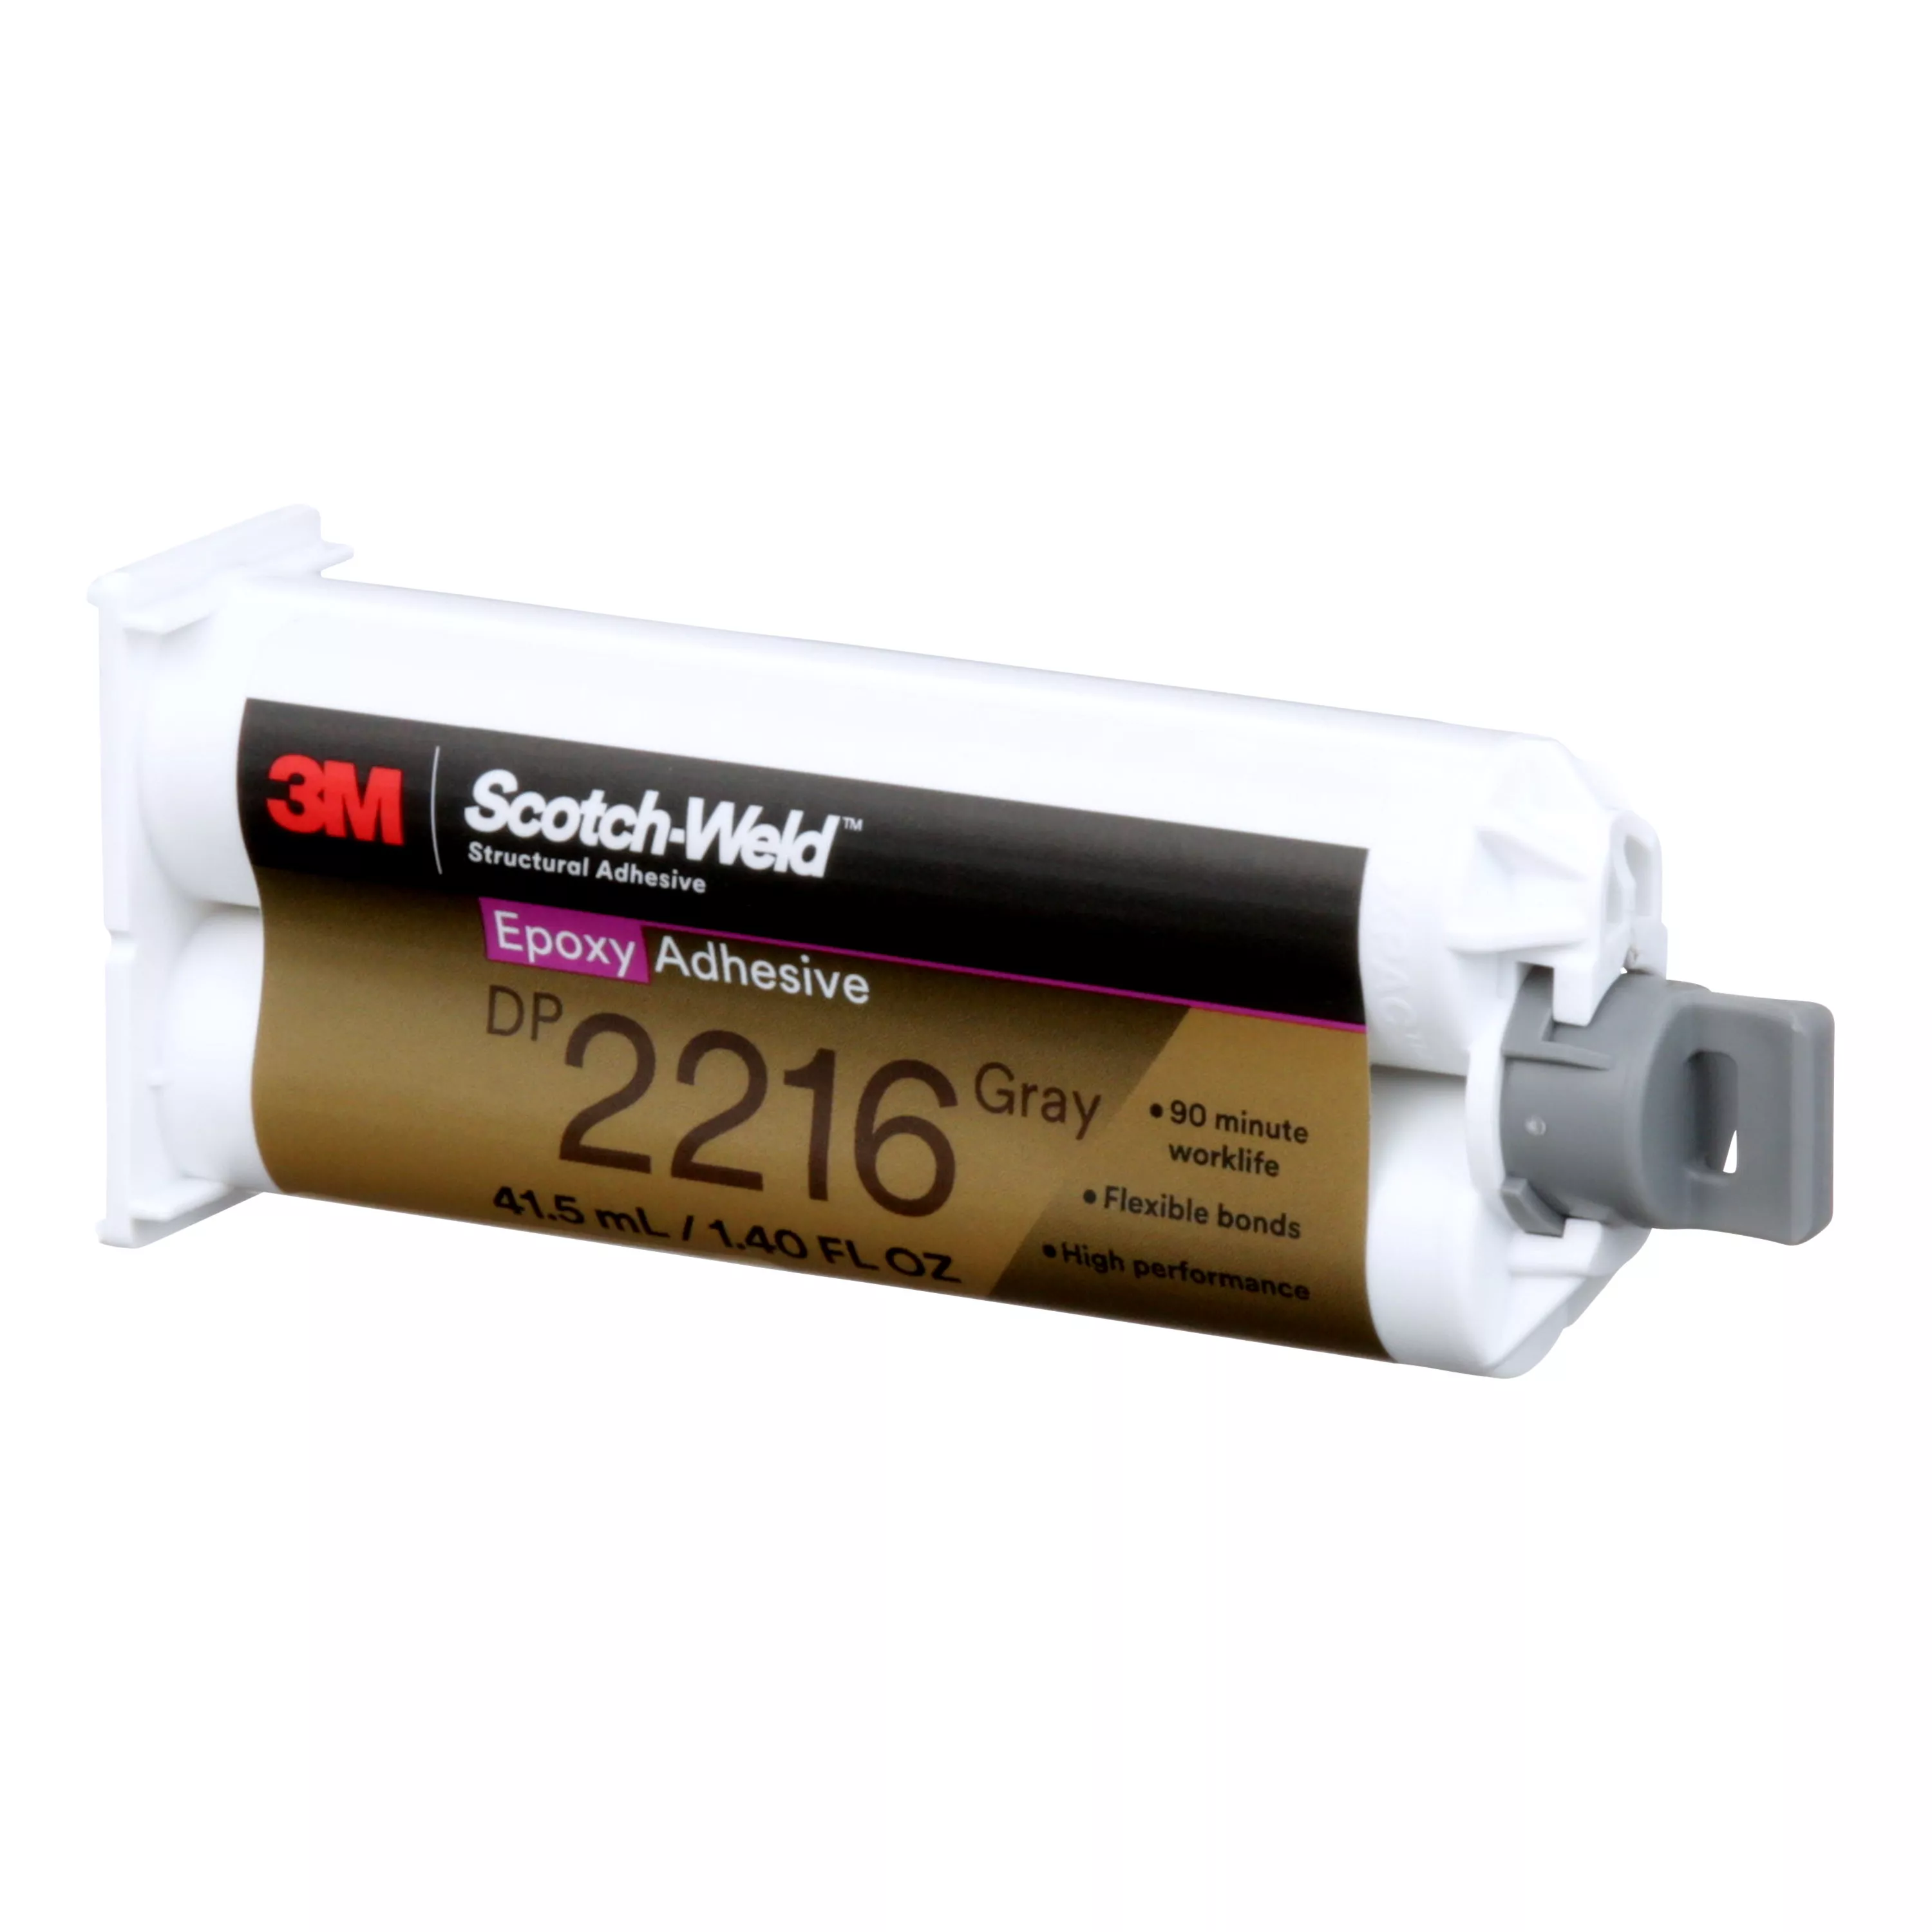 SKU 7100262036 | 3M™ Scotch-Weld™ Epoxy Adhesive DP2216